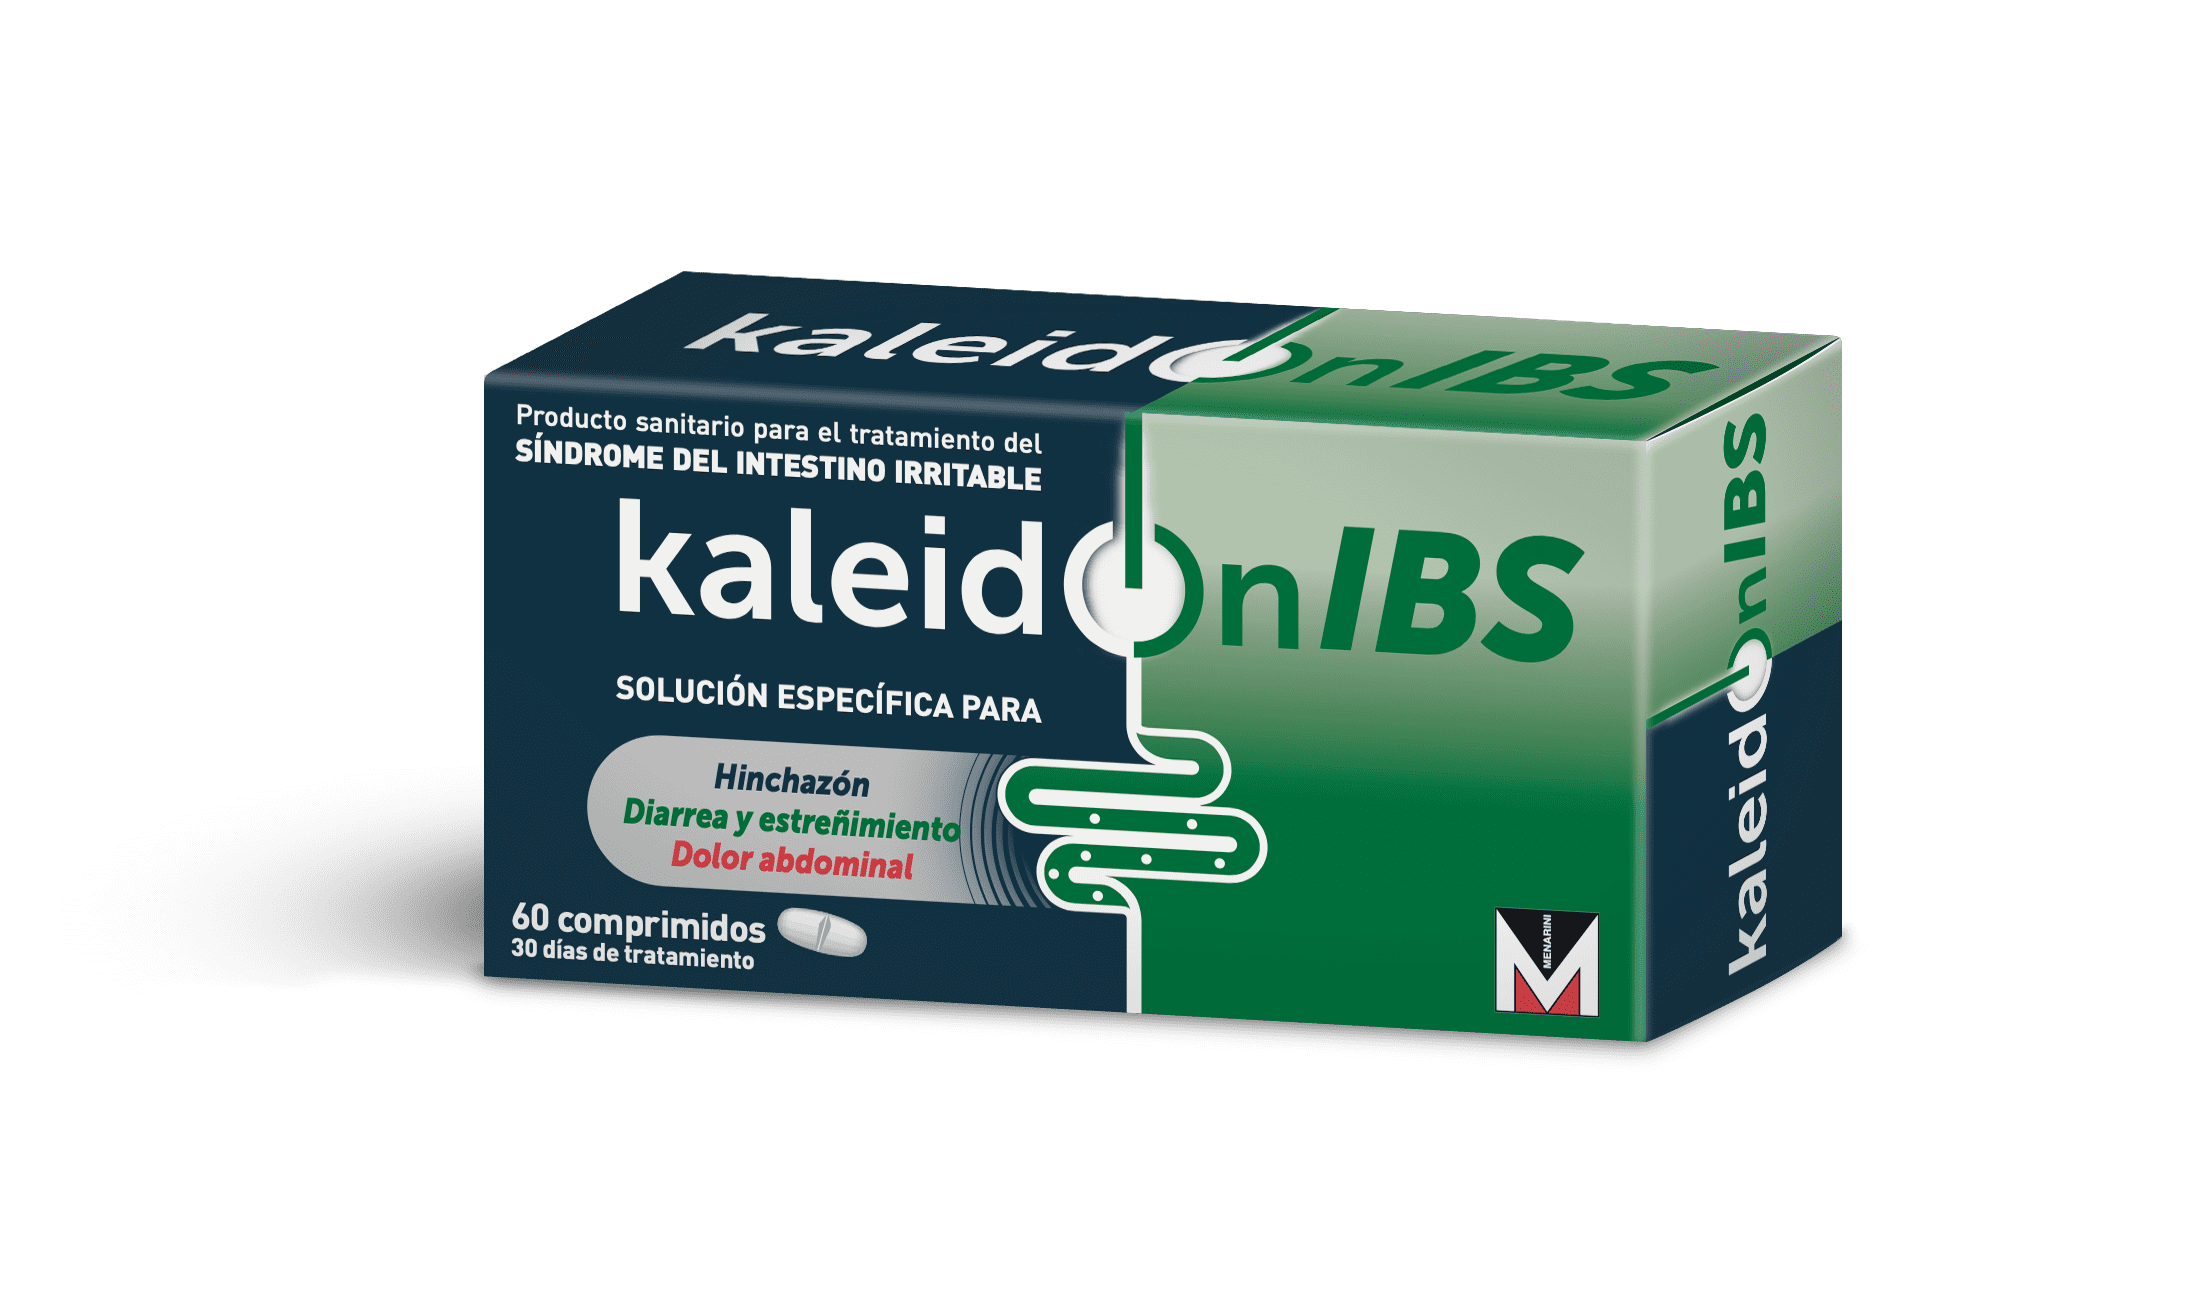 Kaleidon IBS